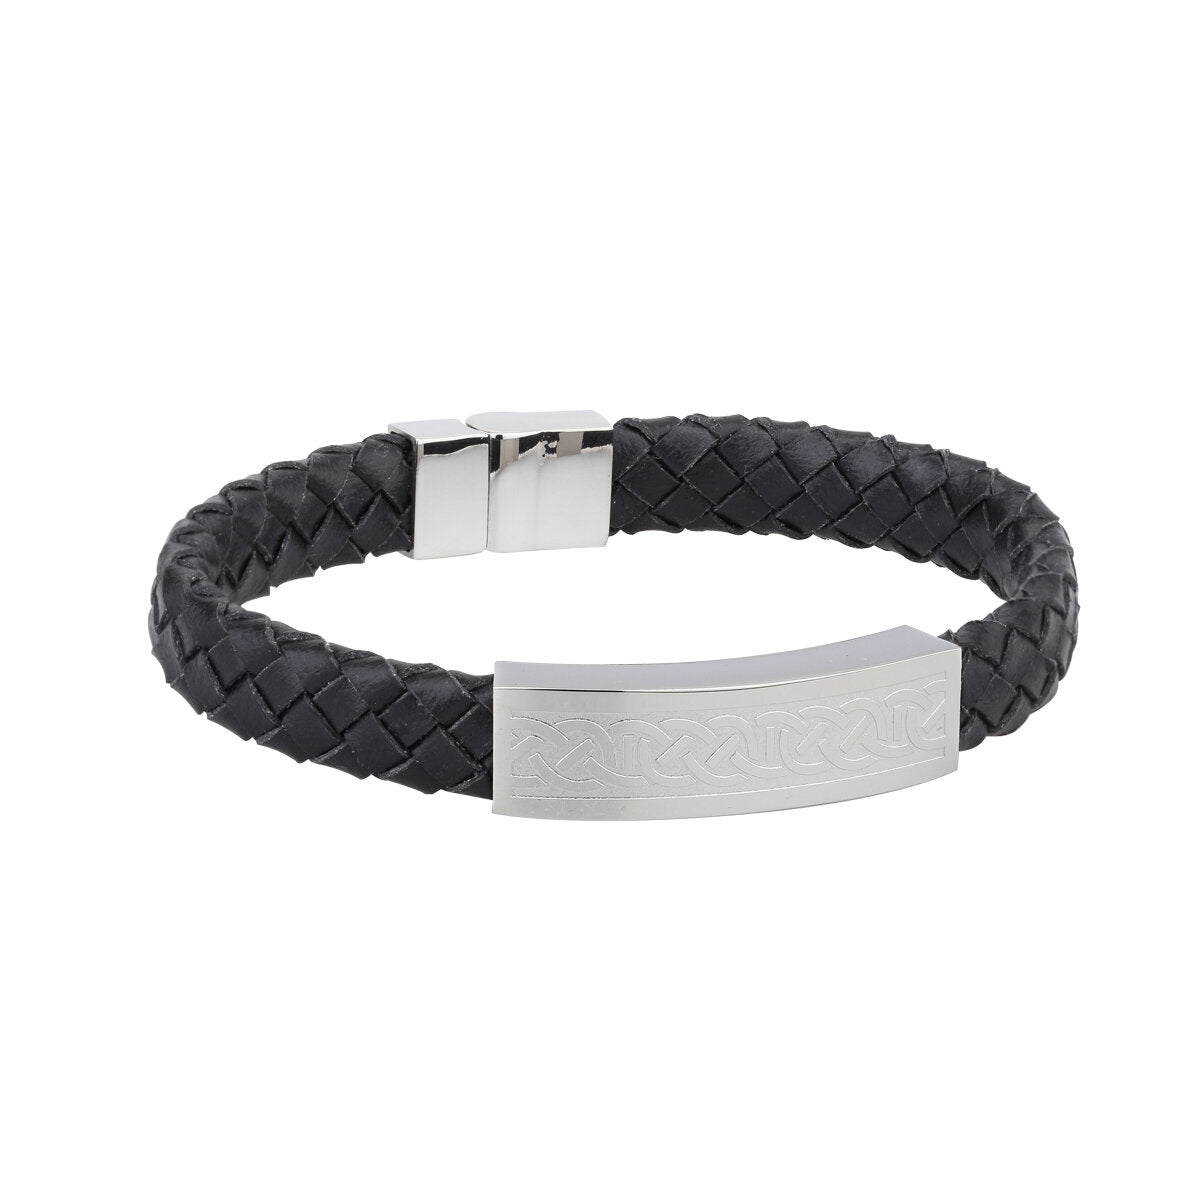 S5830 Stainless Steel & Black Leather Bracelet